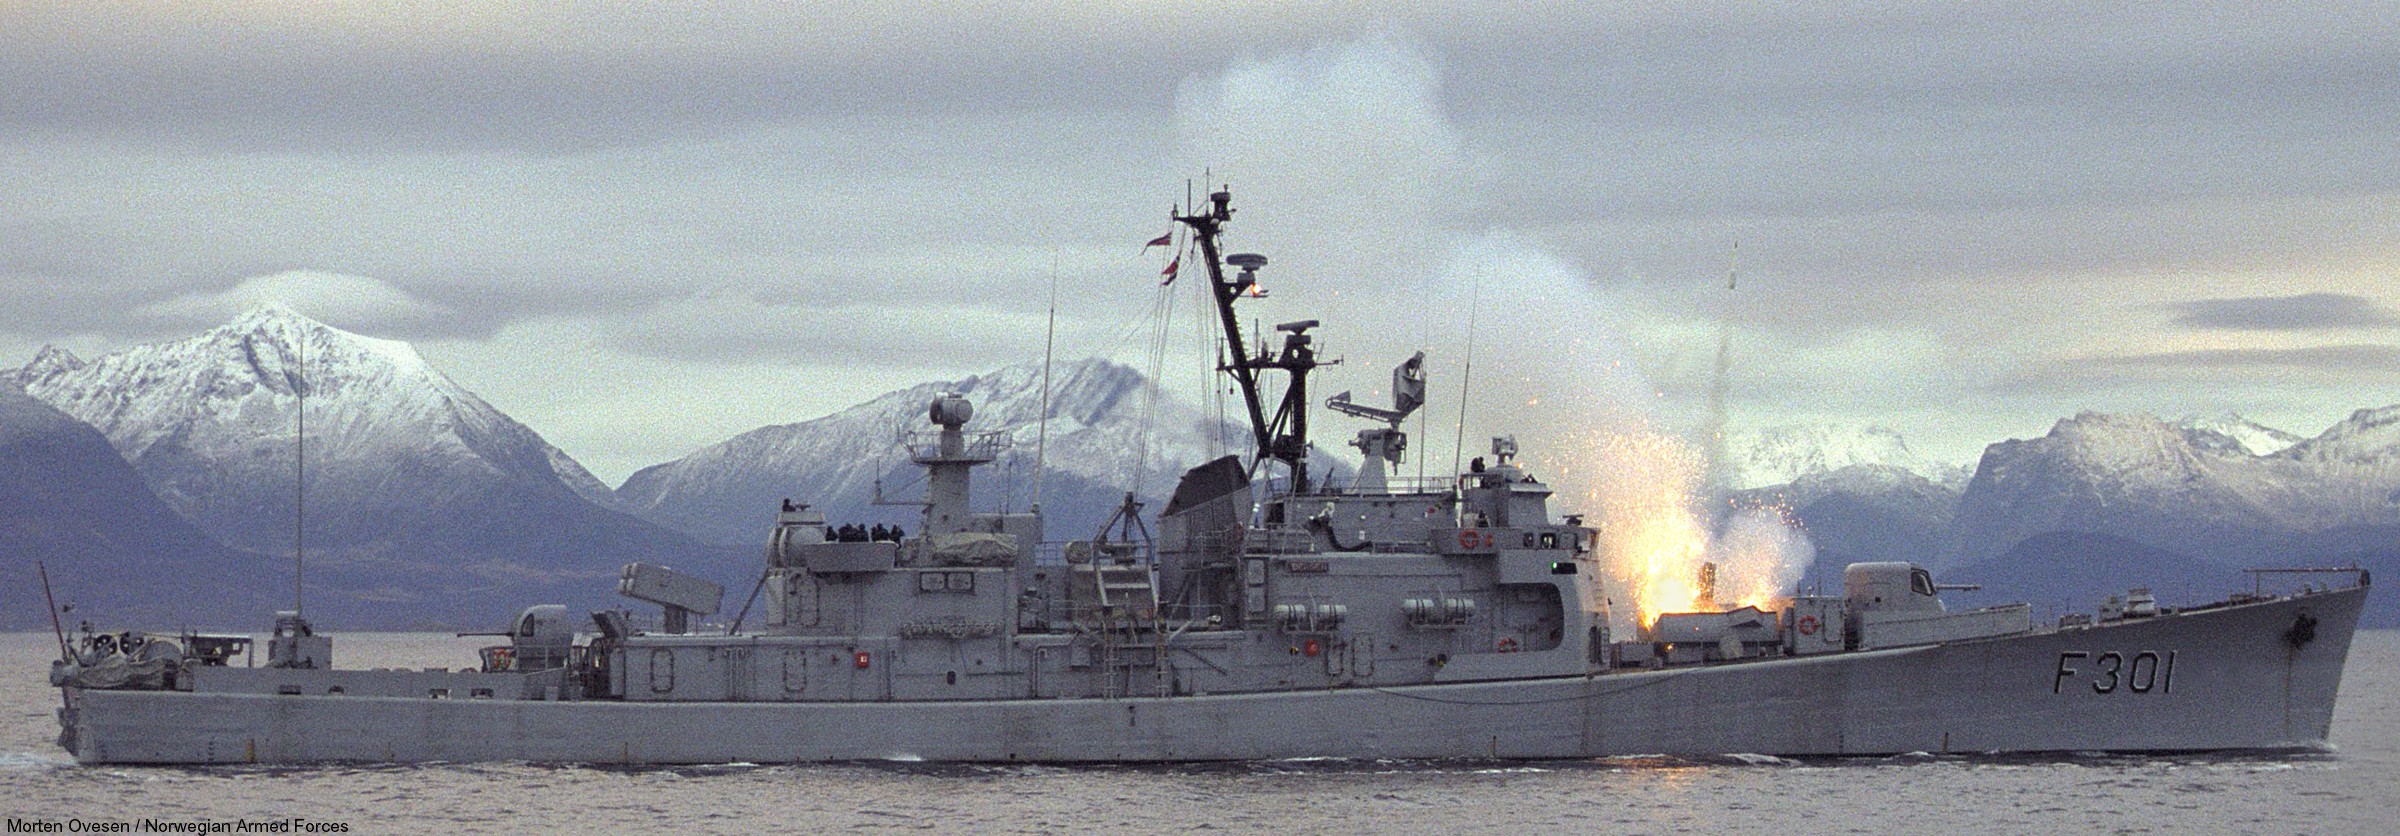 f-301 hnoms bergen knm oslo class frigate royal norwegian navy sjoforsvaret 10 kongsberg terne asw rocket